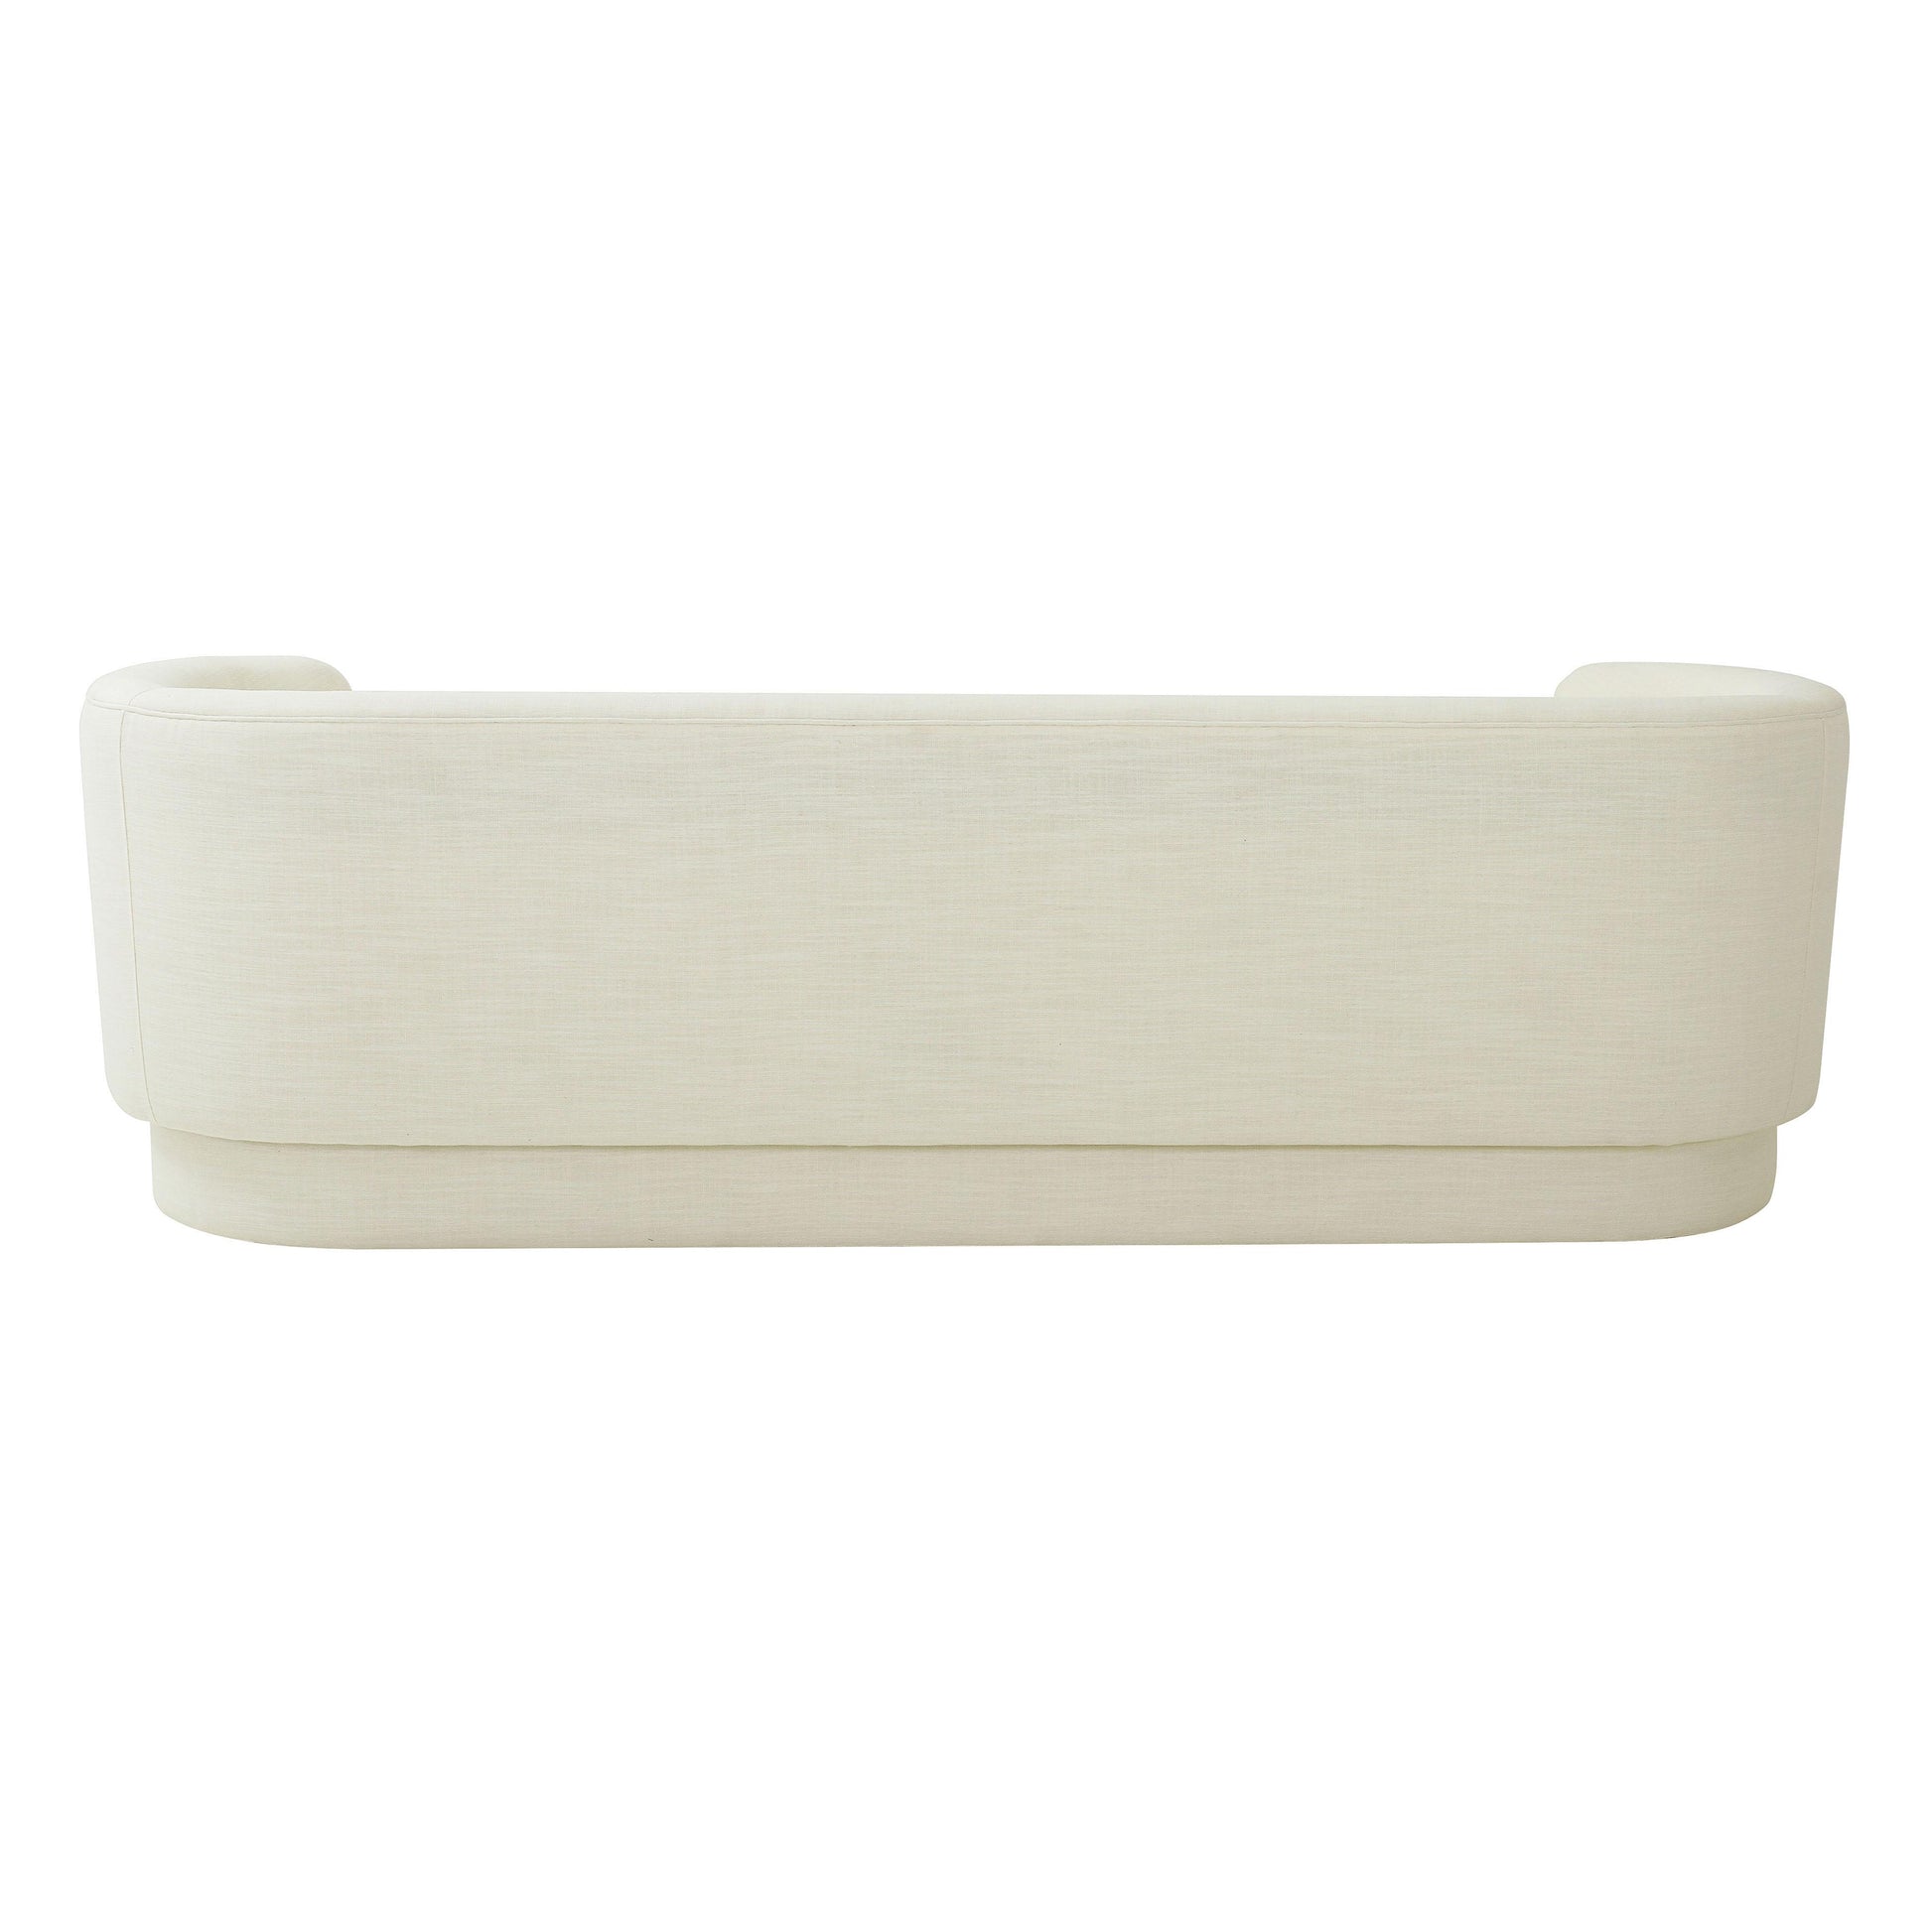 Macie Cream Linen Sofa by TOV